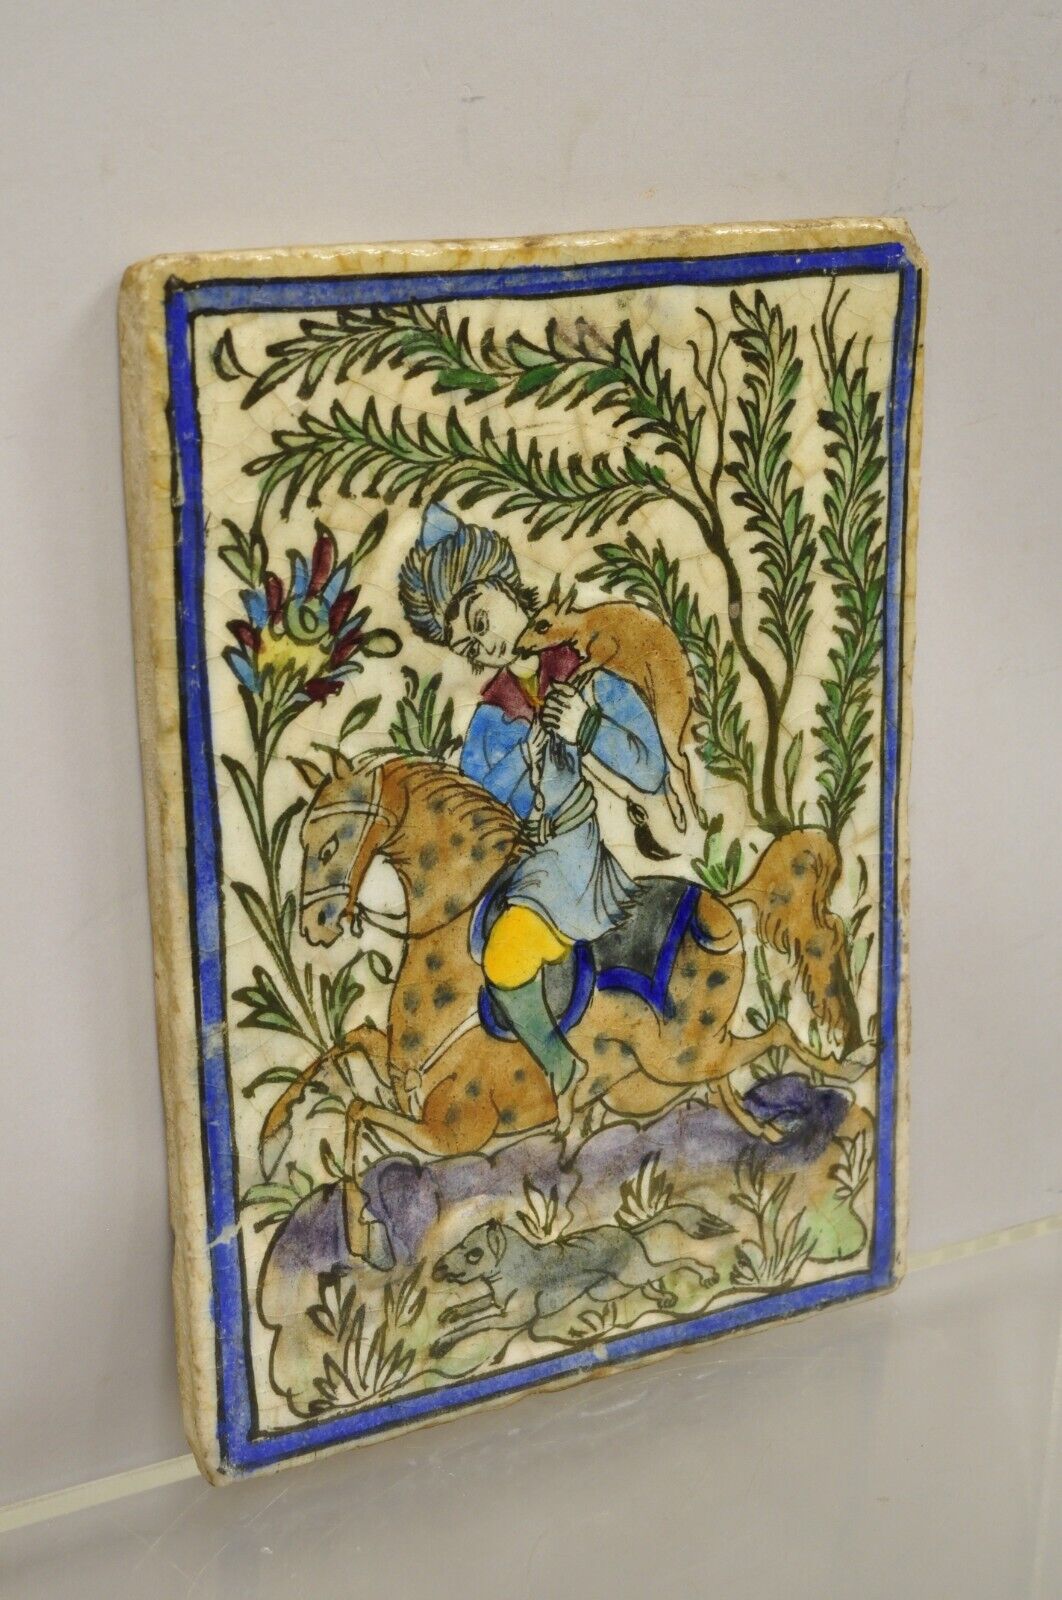 Antique Persian Iznik Qajar Style Ceramic Pottery Tile Horse Rider Hunt Scene C1